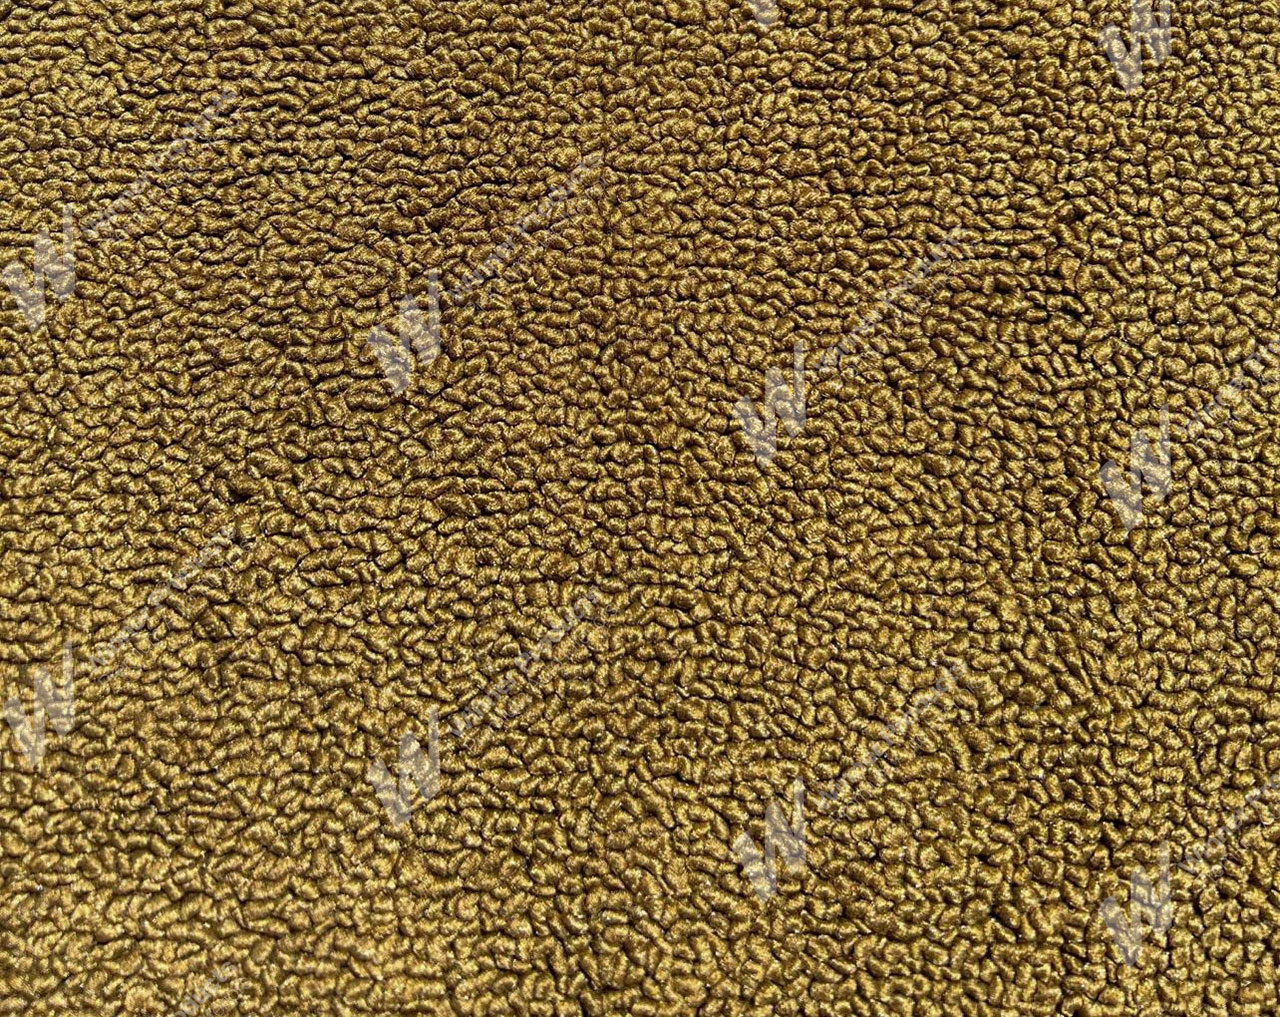 Holden Kingswood HT Kingswood Panel Van 11G Antique Gold & Castillion Weave Carpet (Image 1 of 1)